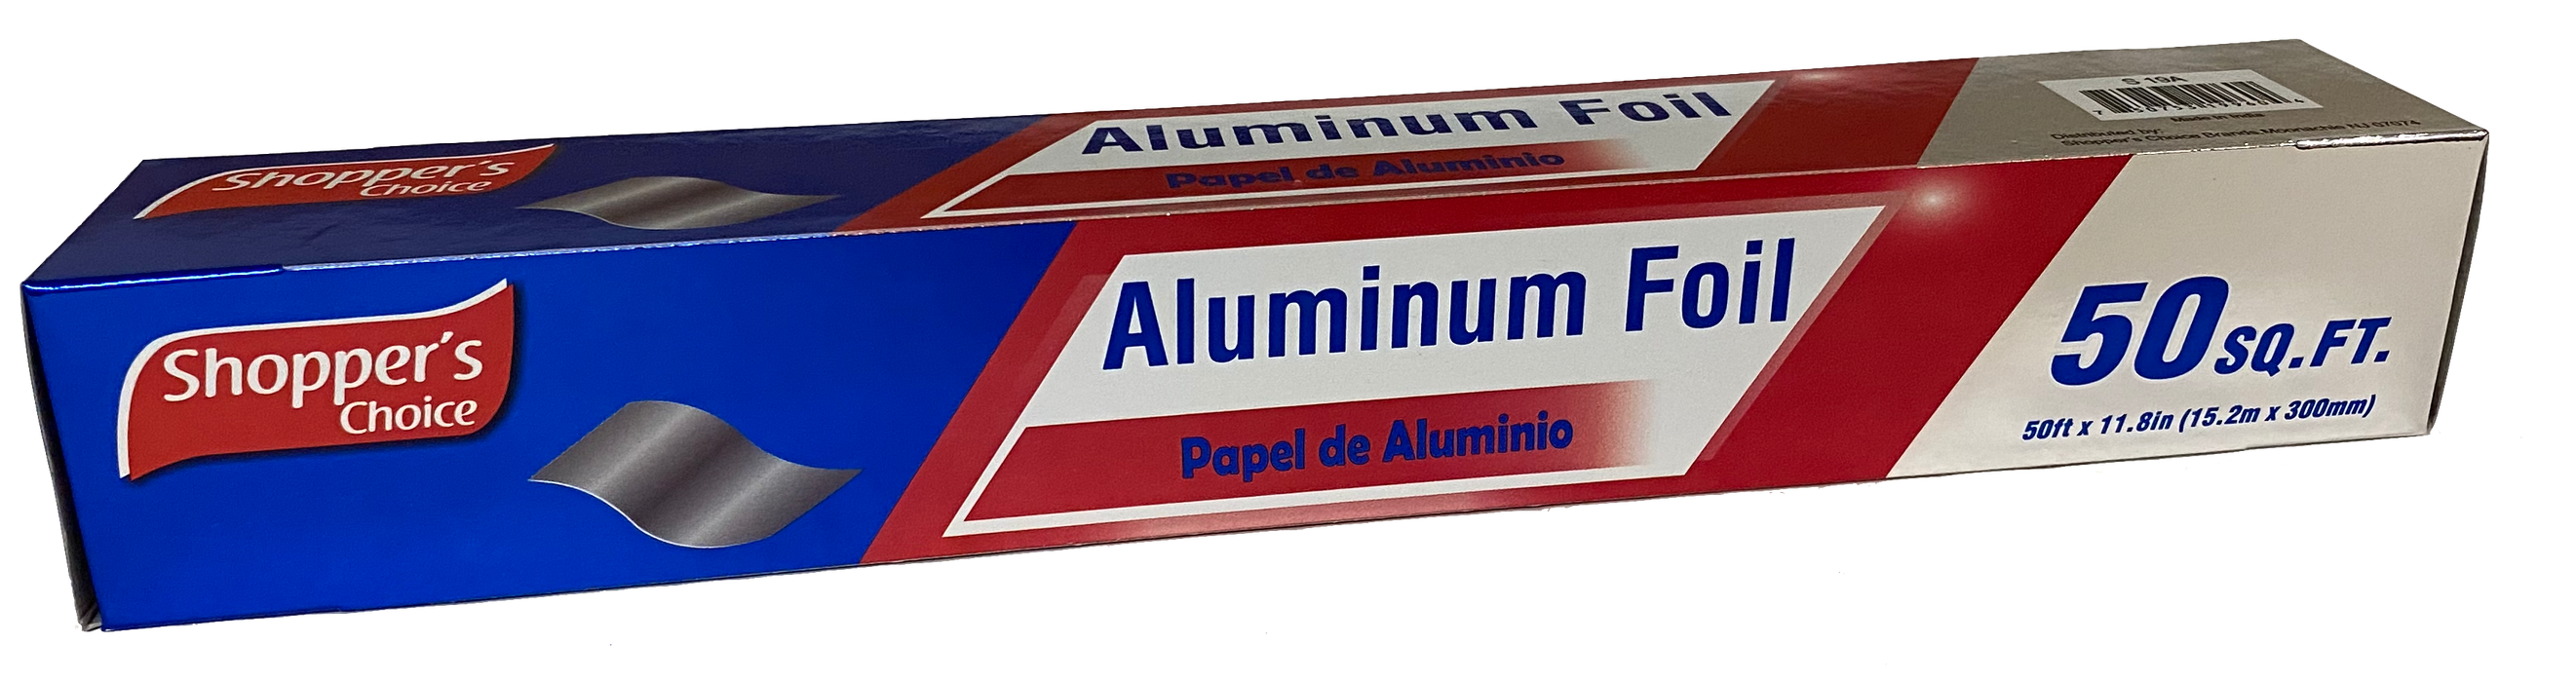 Aluminum Foil 50sqft -